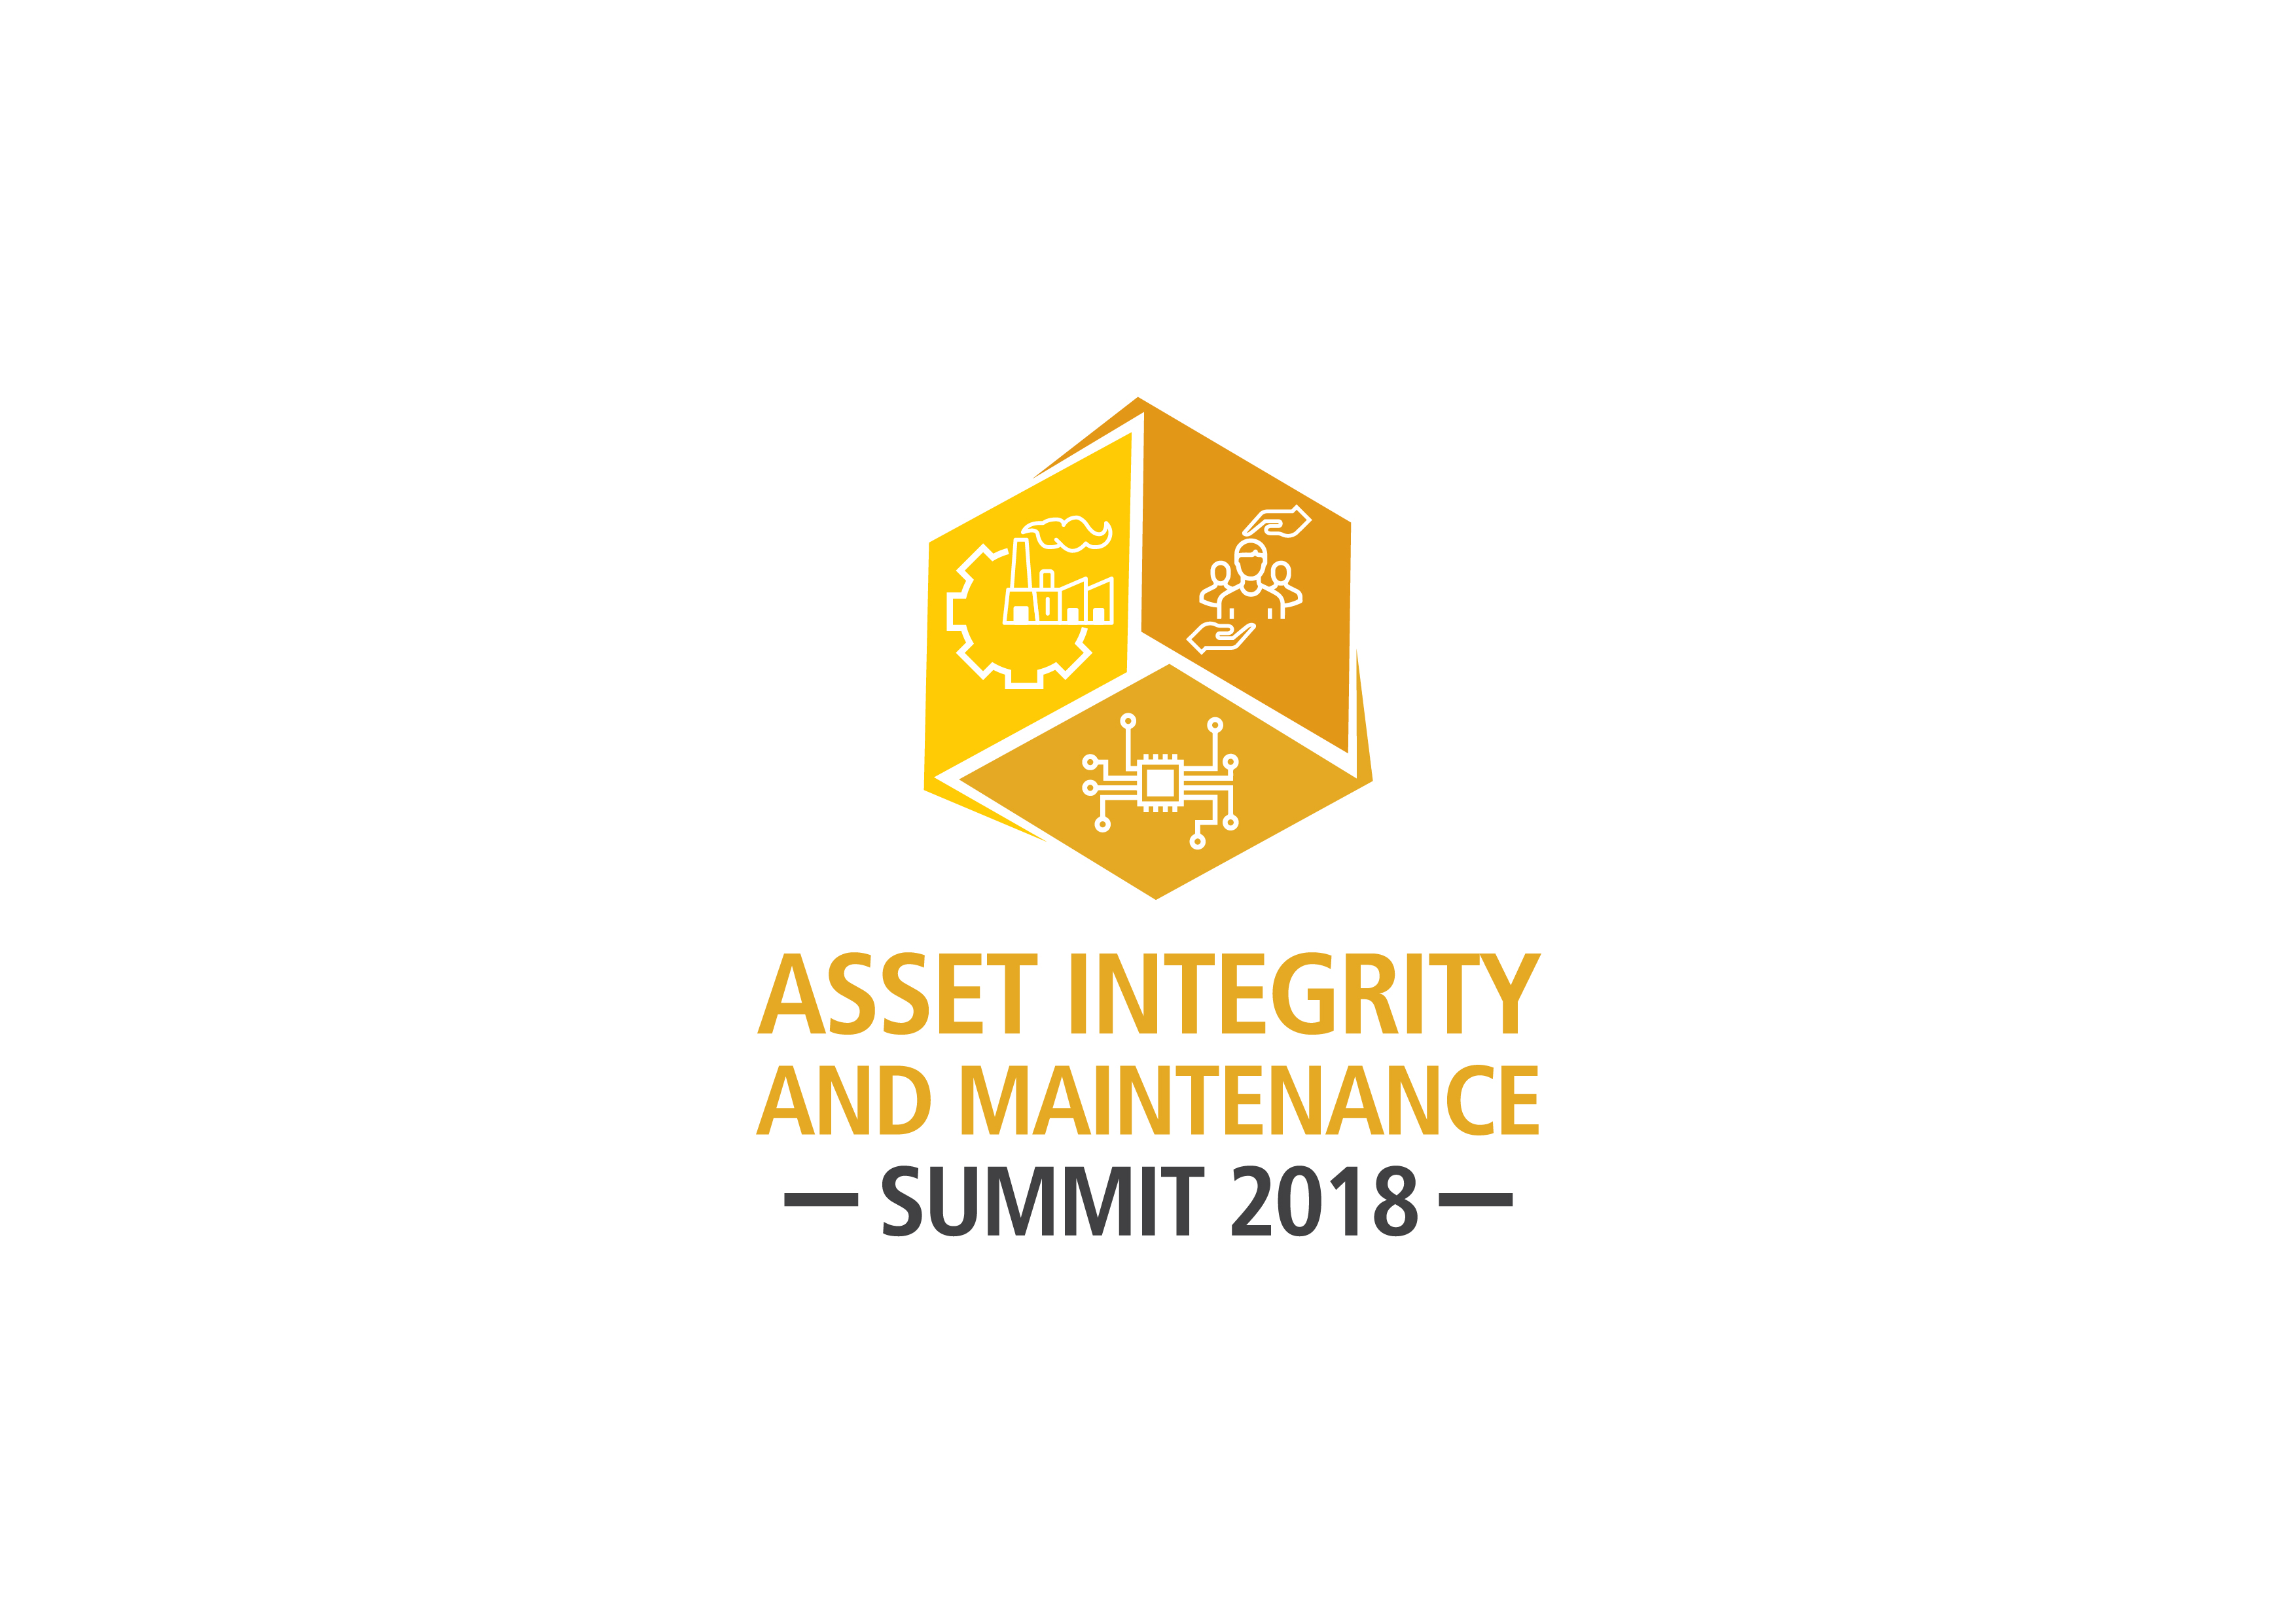 Asset Integrity and Maintenance Summit